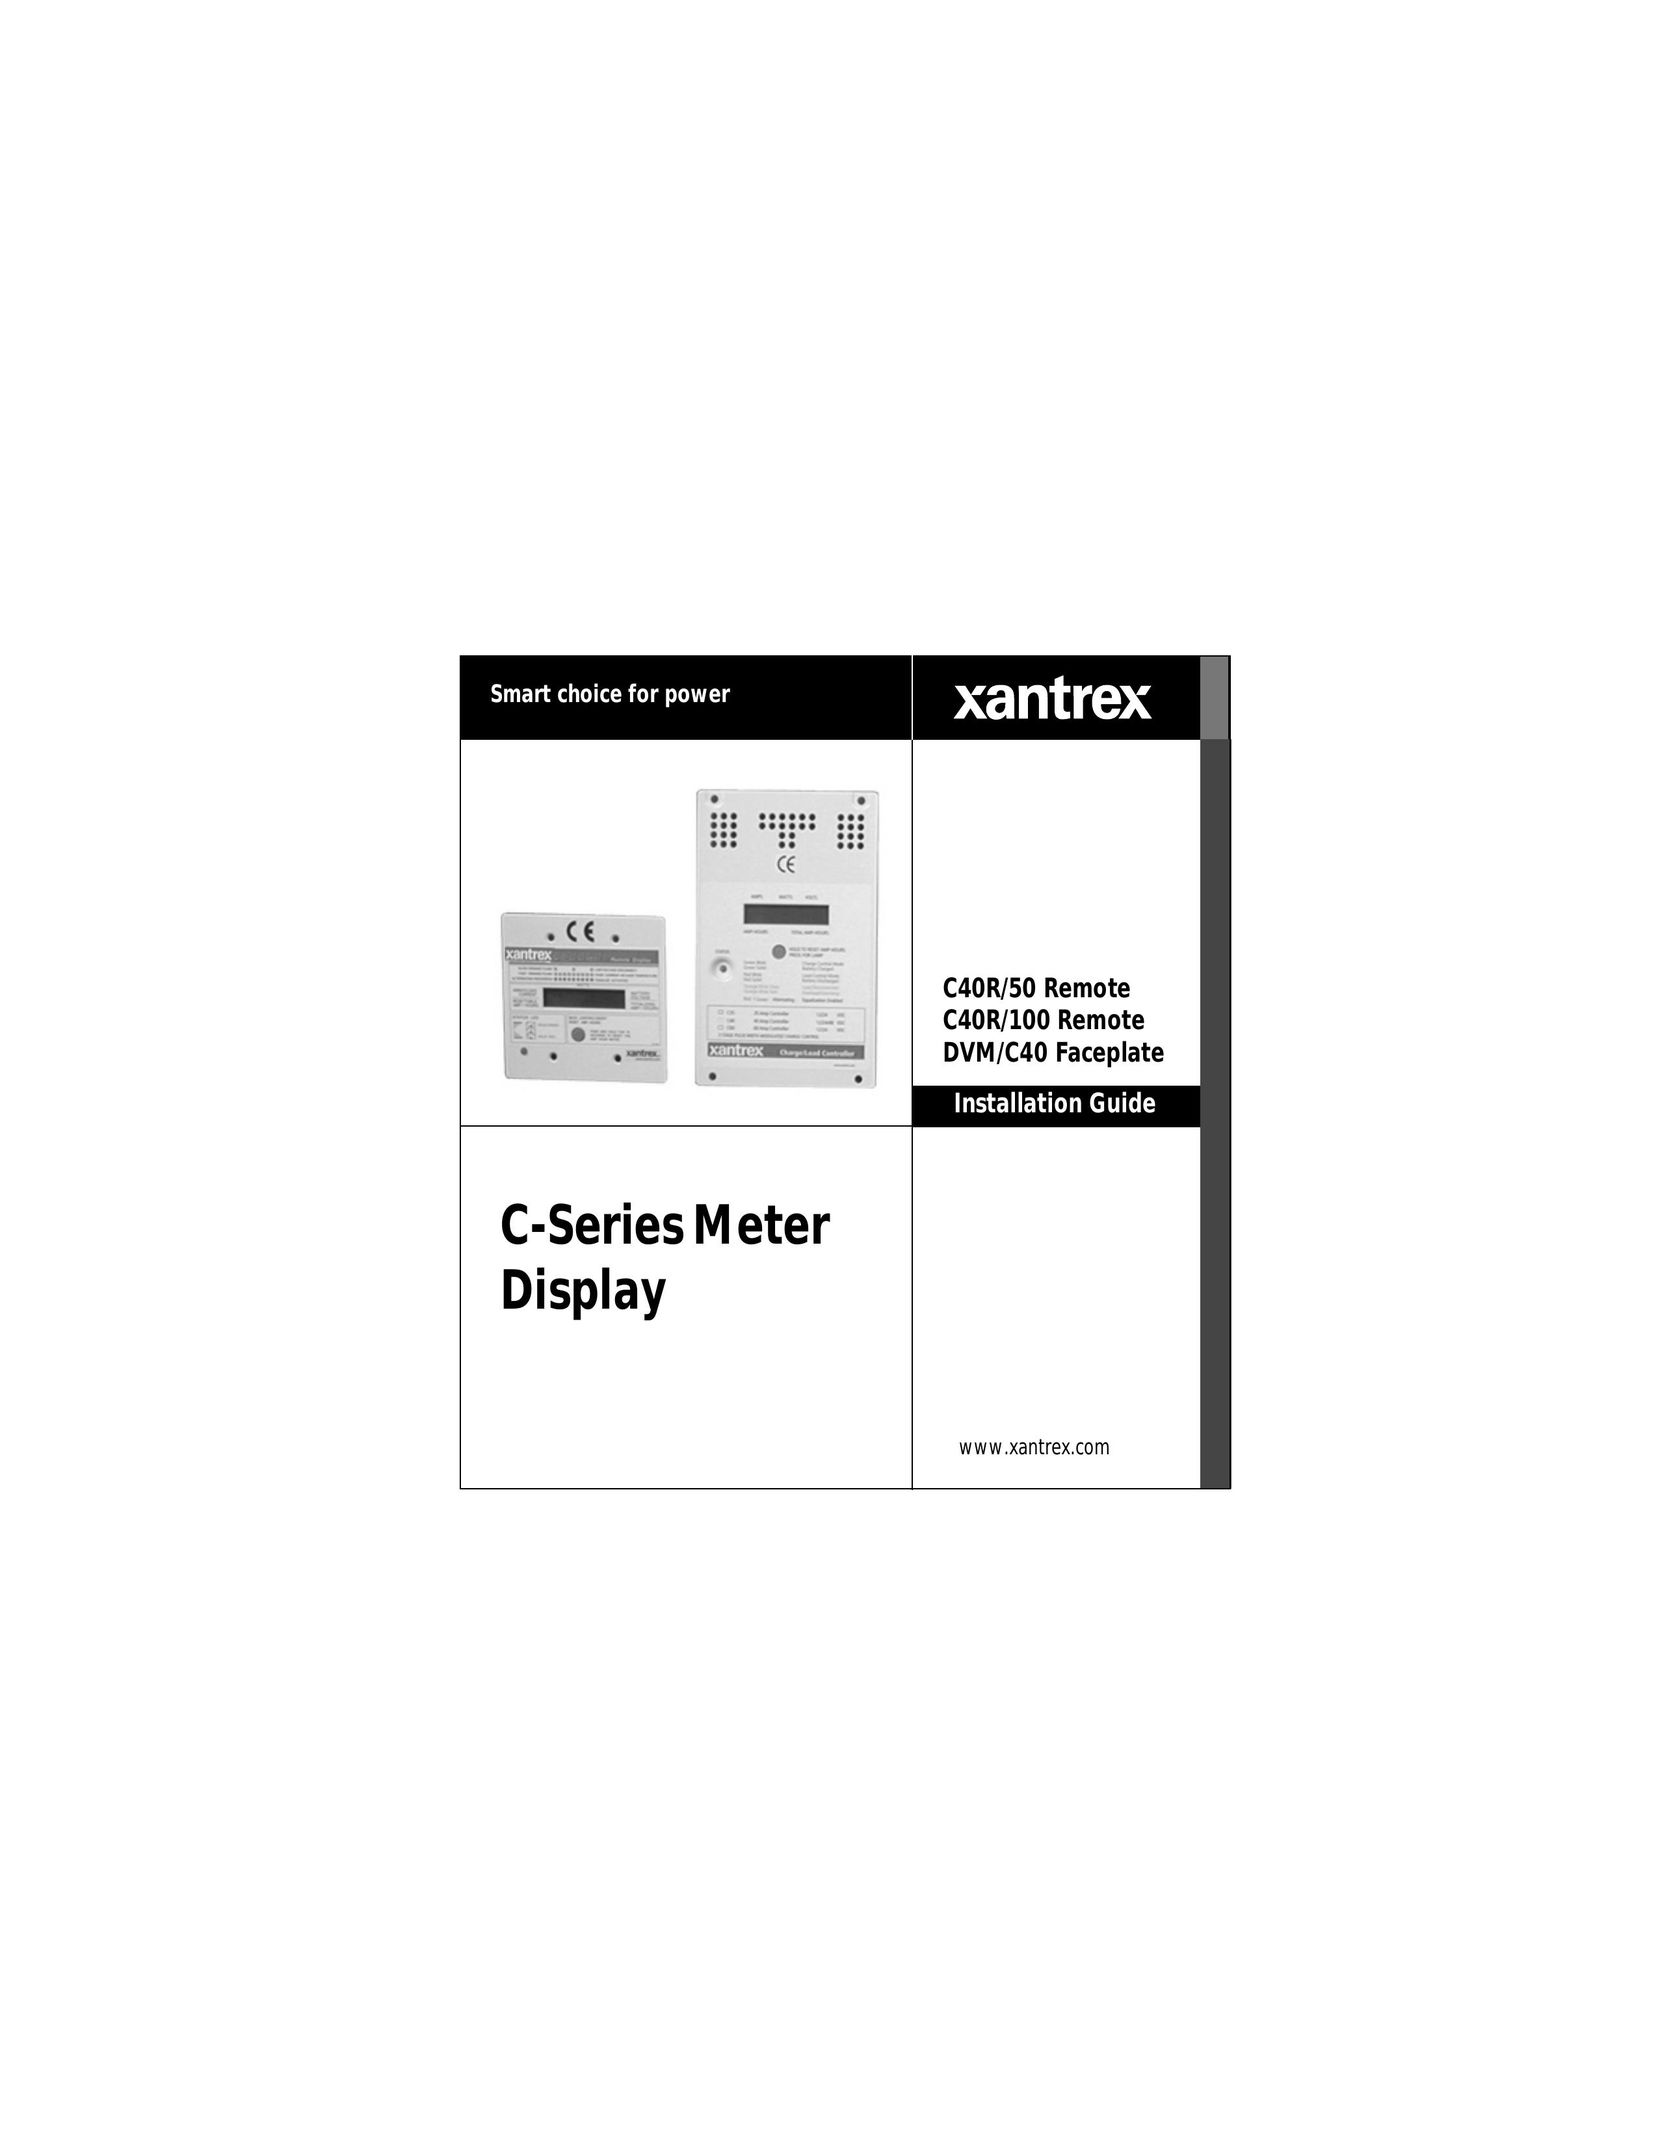 Xantrex Technology C40R/50, C40R/100, DVM/C40 Power Supply User Manual